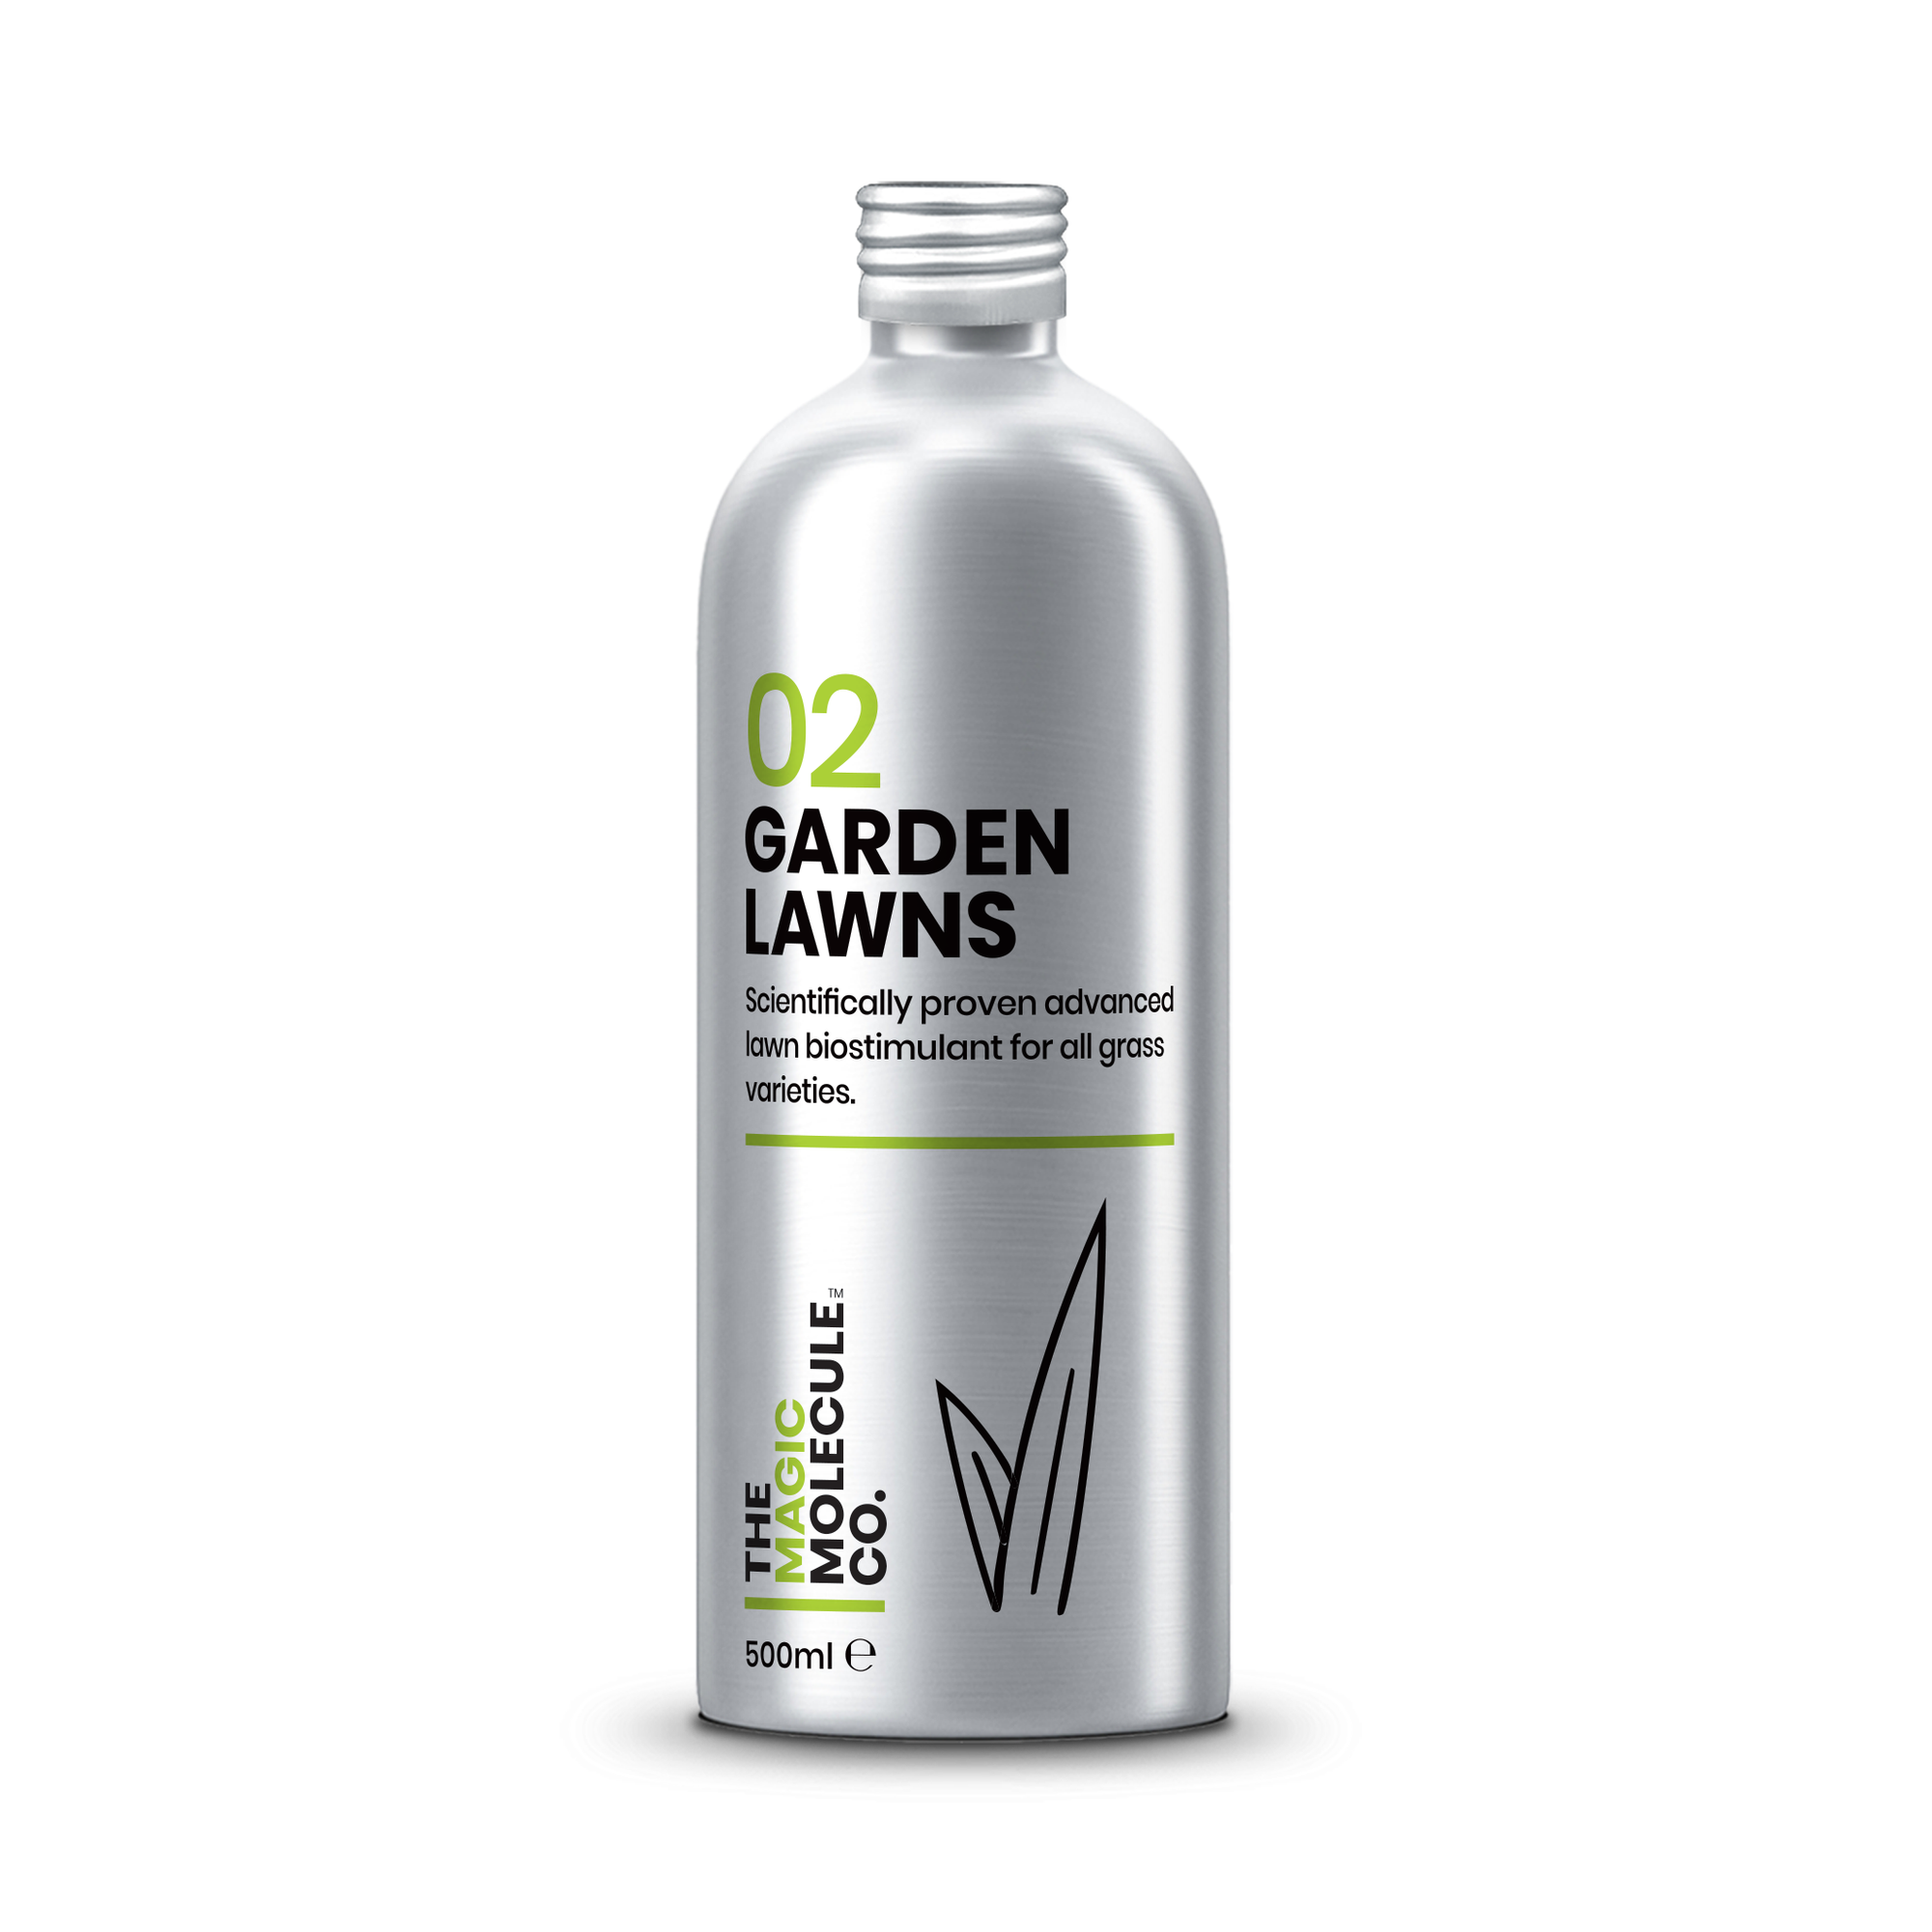 02 Garden Lawns Biostimulant - 500ml